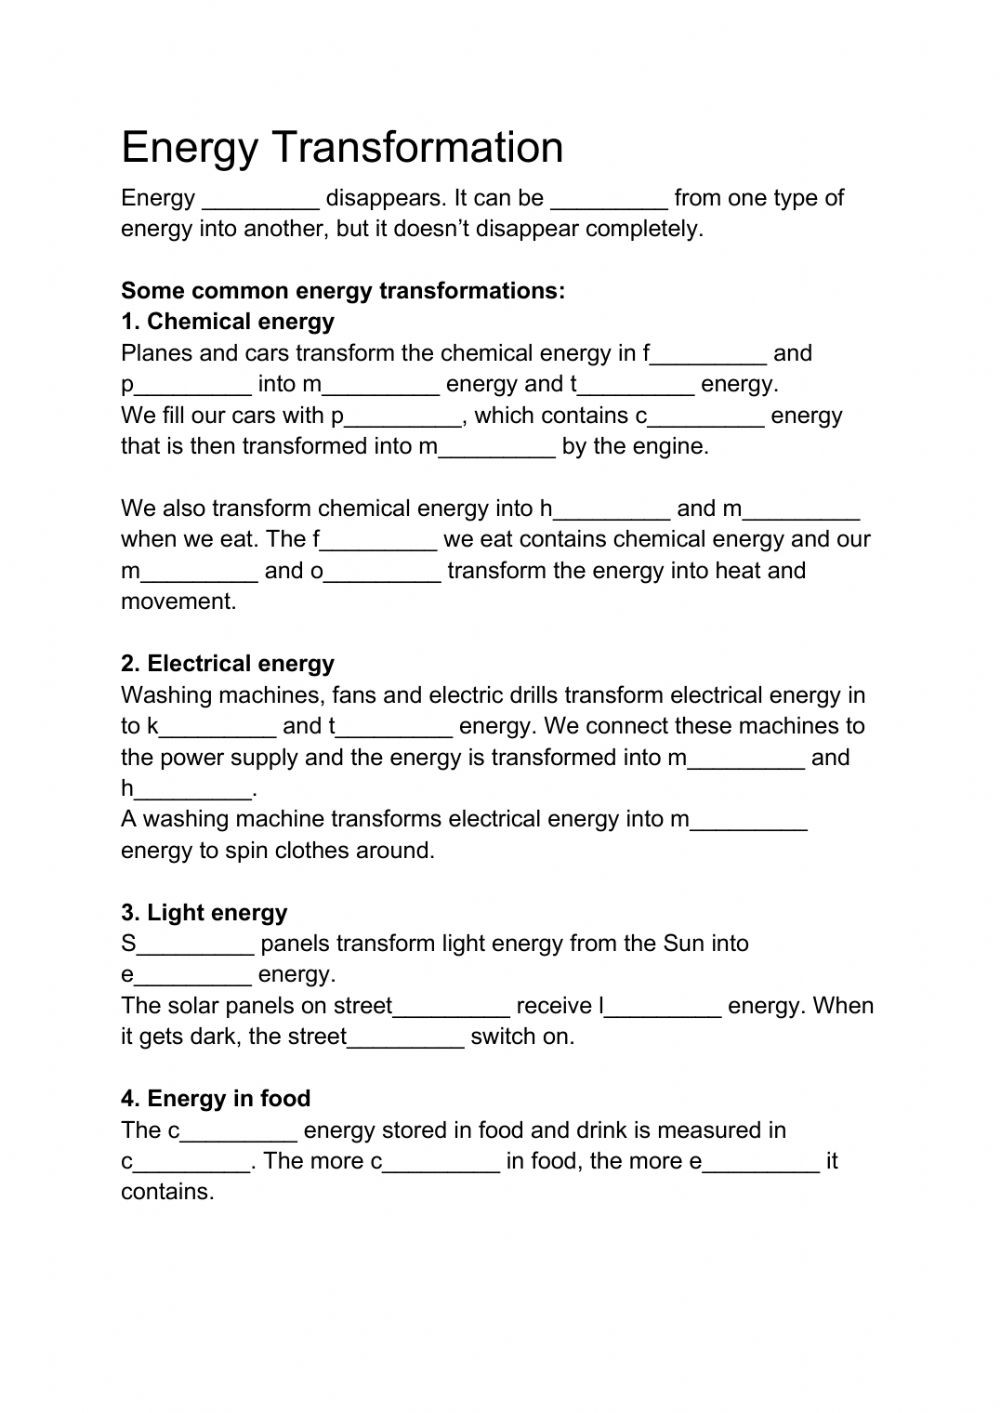 Energy Transformation Worksheet Answers Energy Transformation Interactive Worksheet